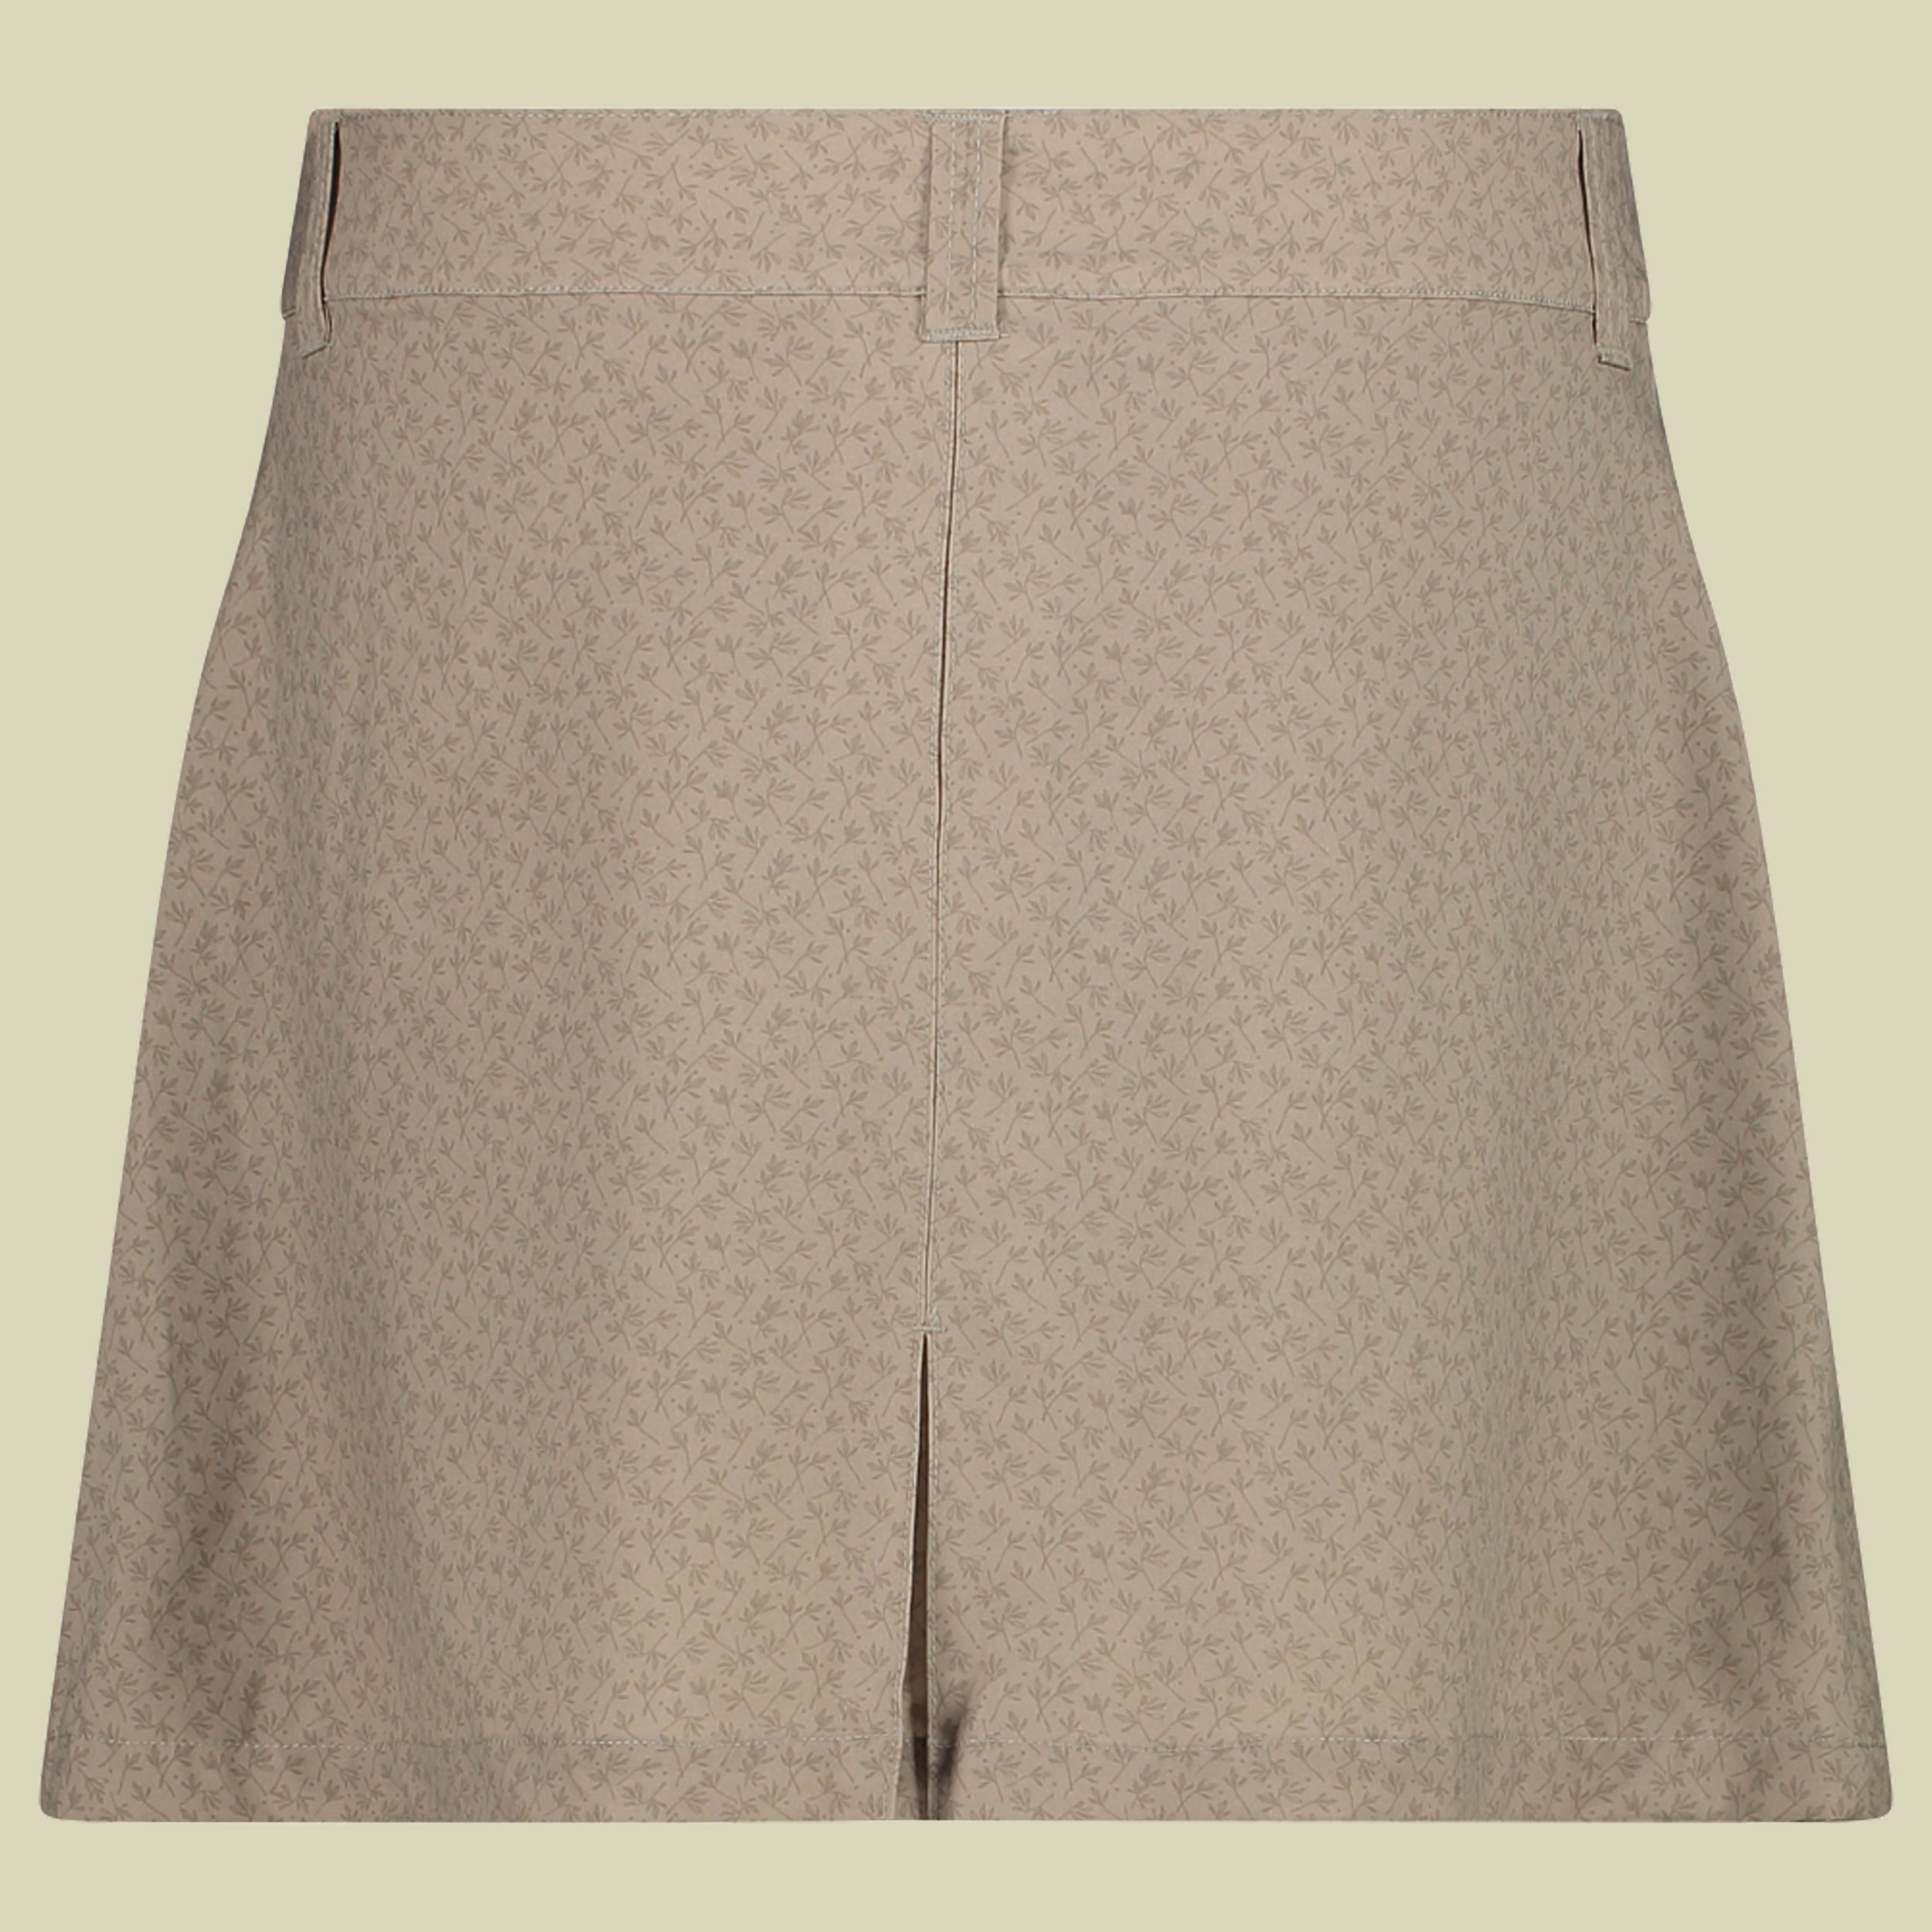 Woman Skirt 2 in 1 Größe 36 Farbe sand P631